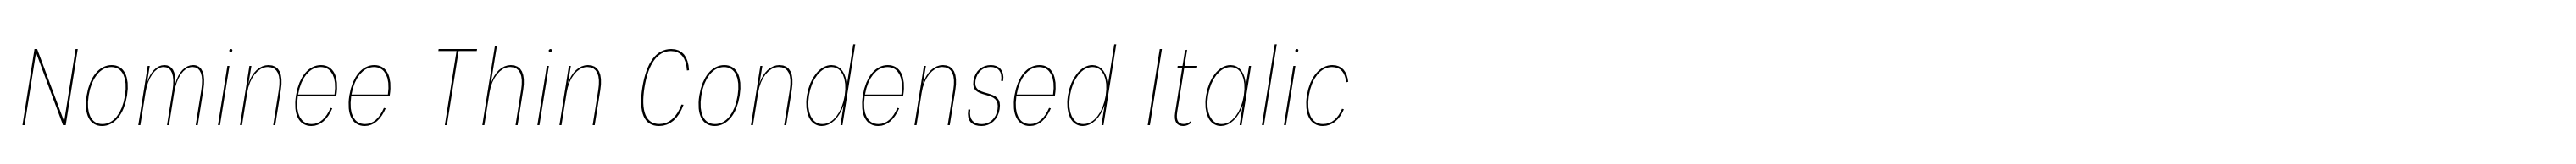 Nominee Thin Condensed Italic